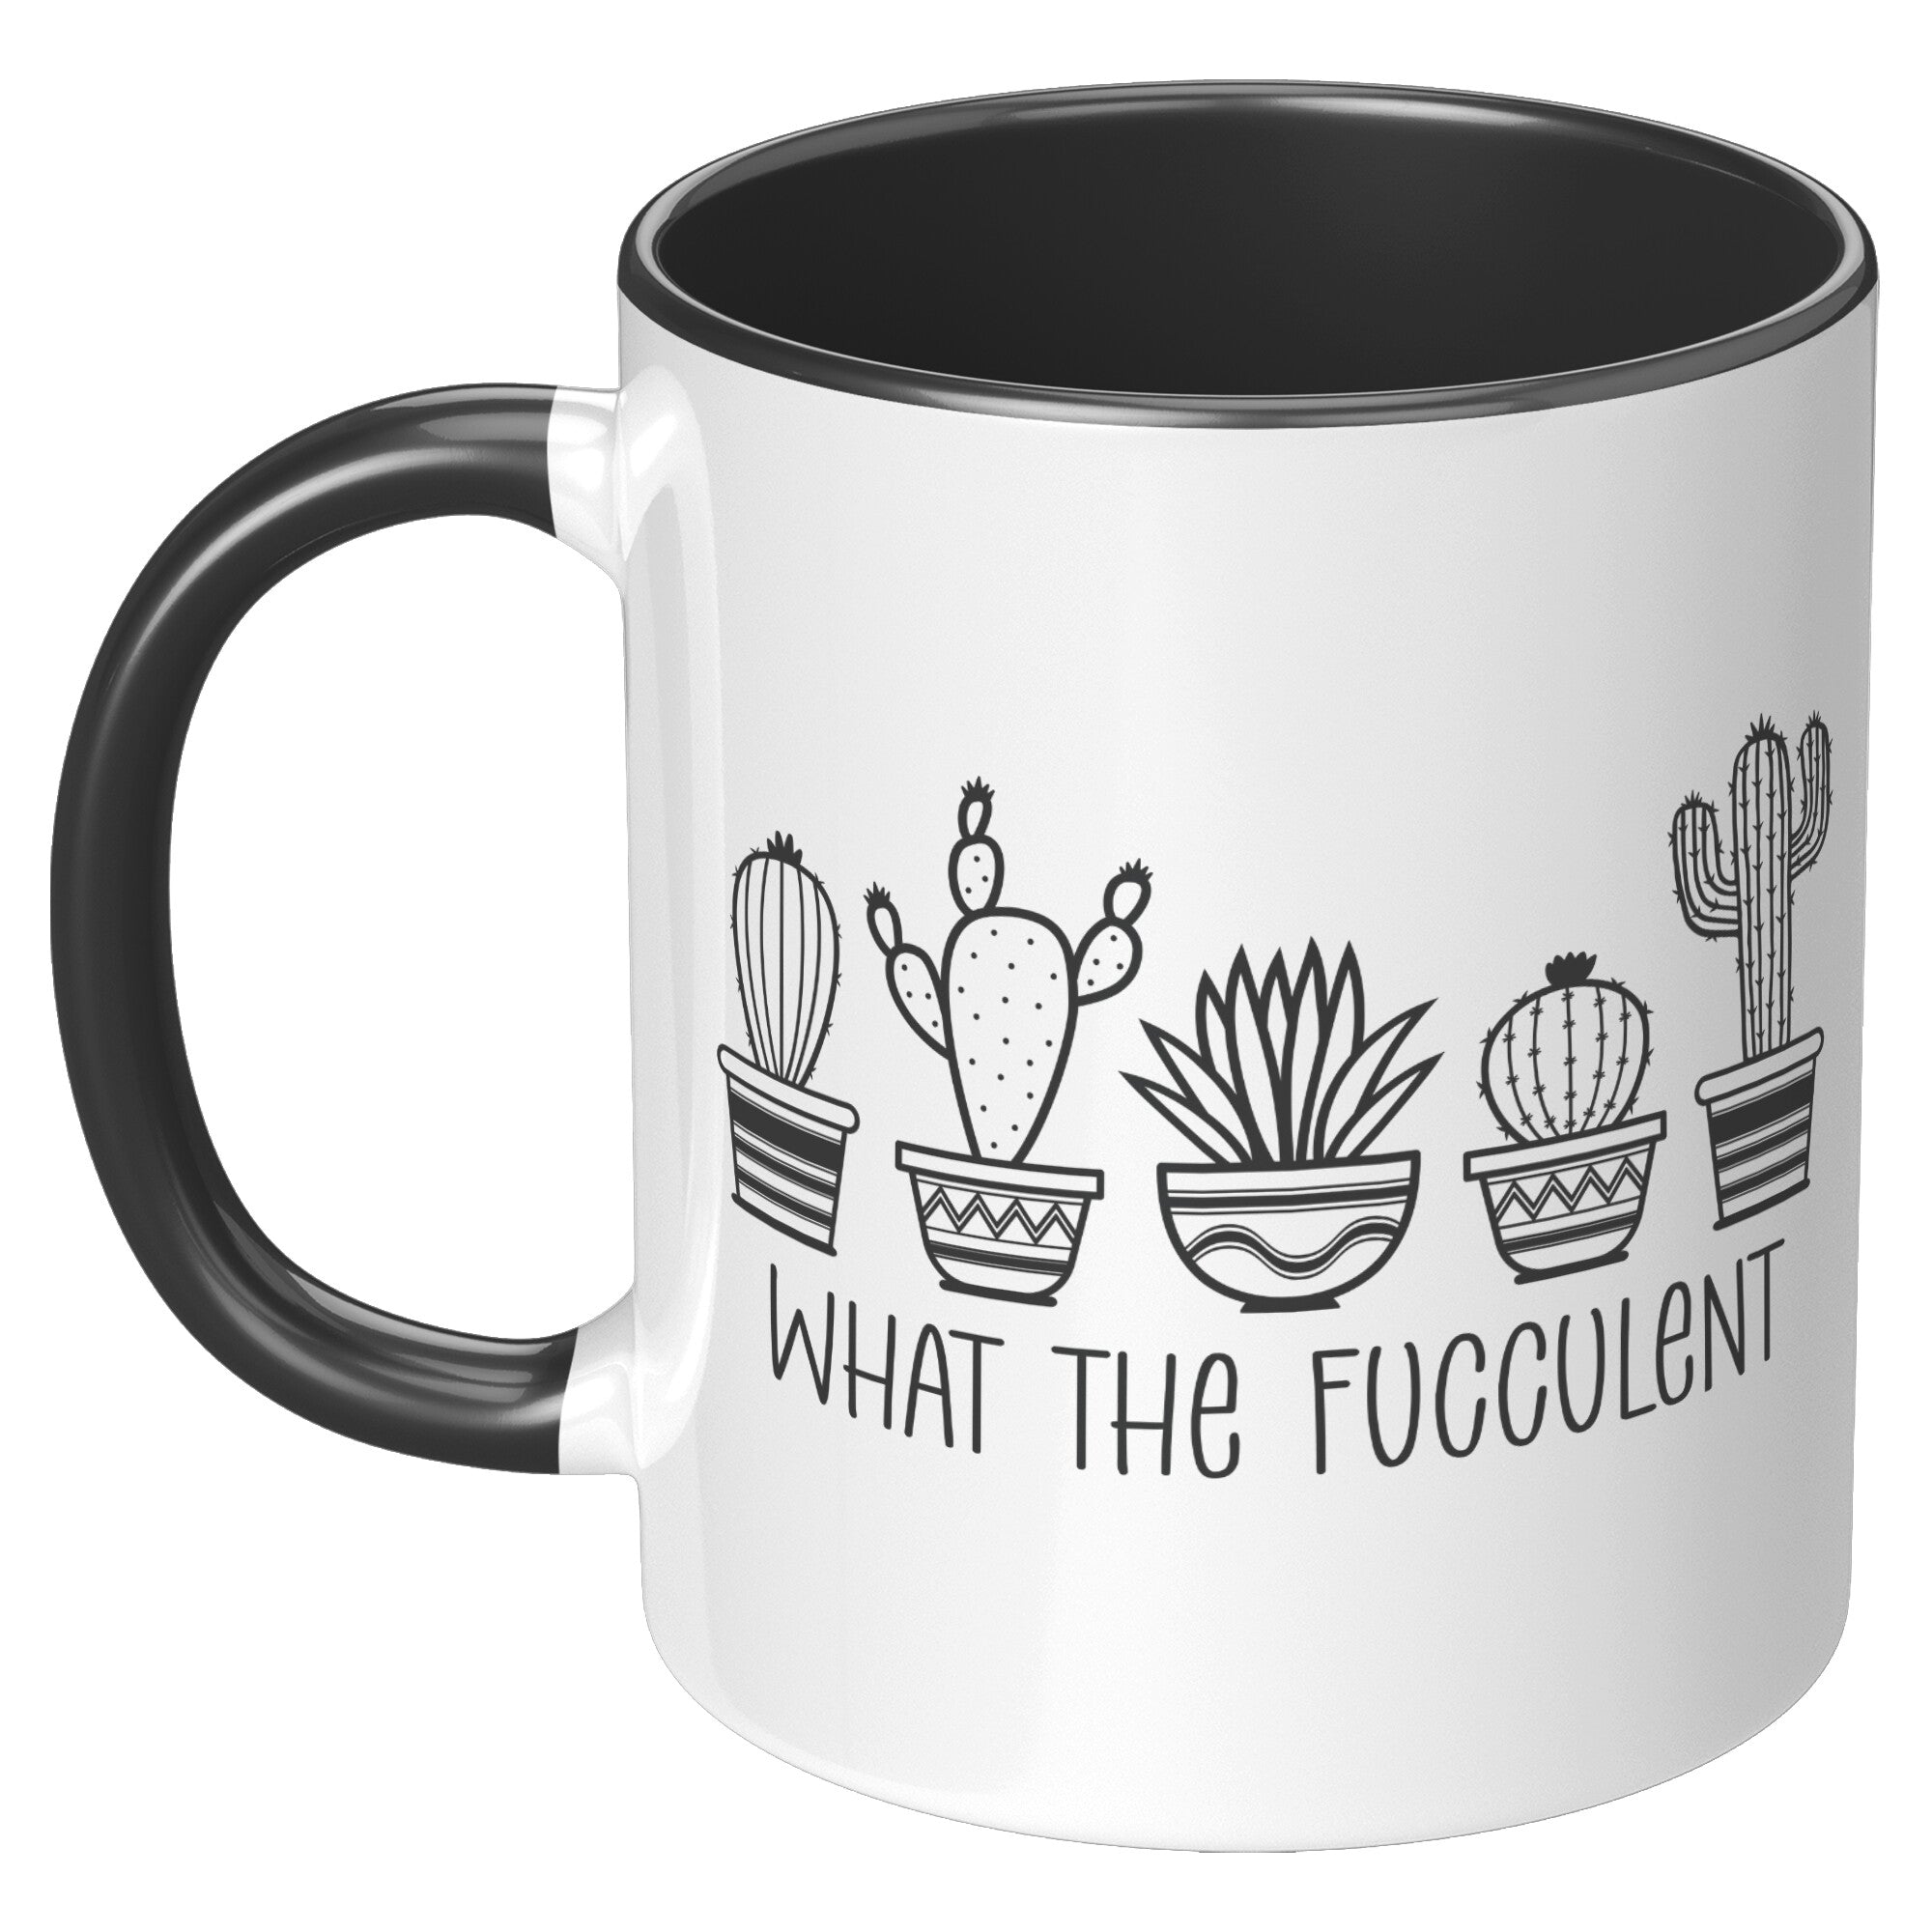 What The Fucculent Ceramic Coffee Mug For Gardeners.